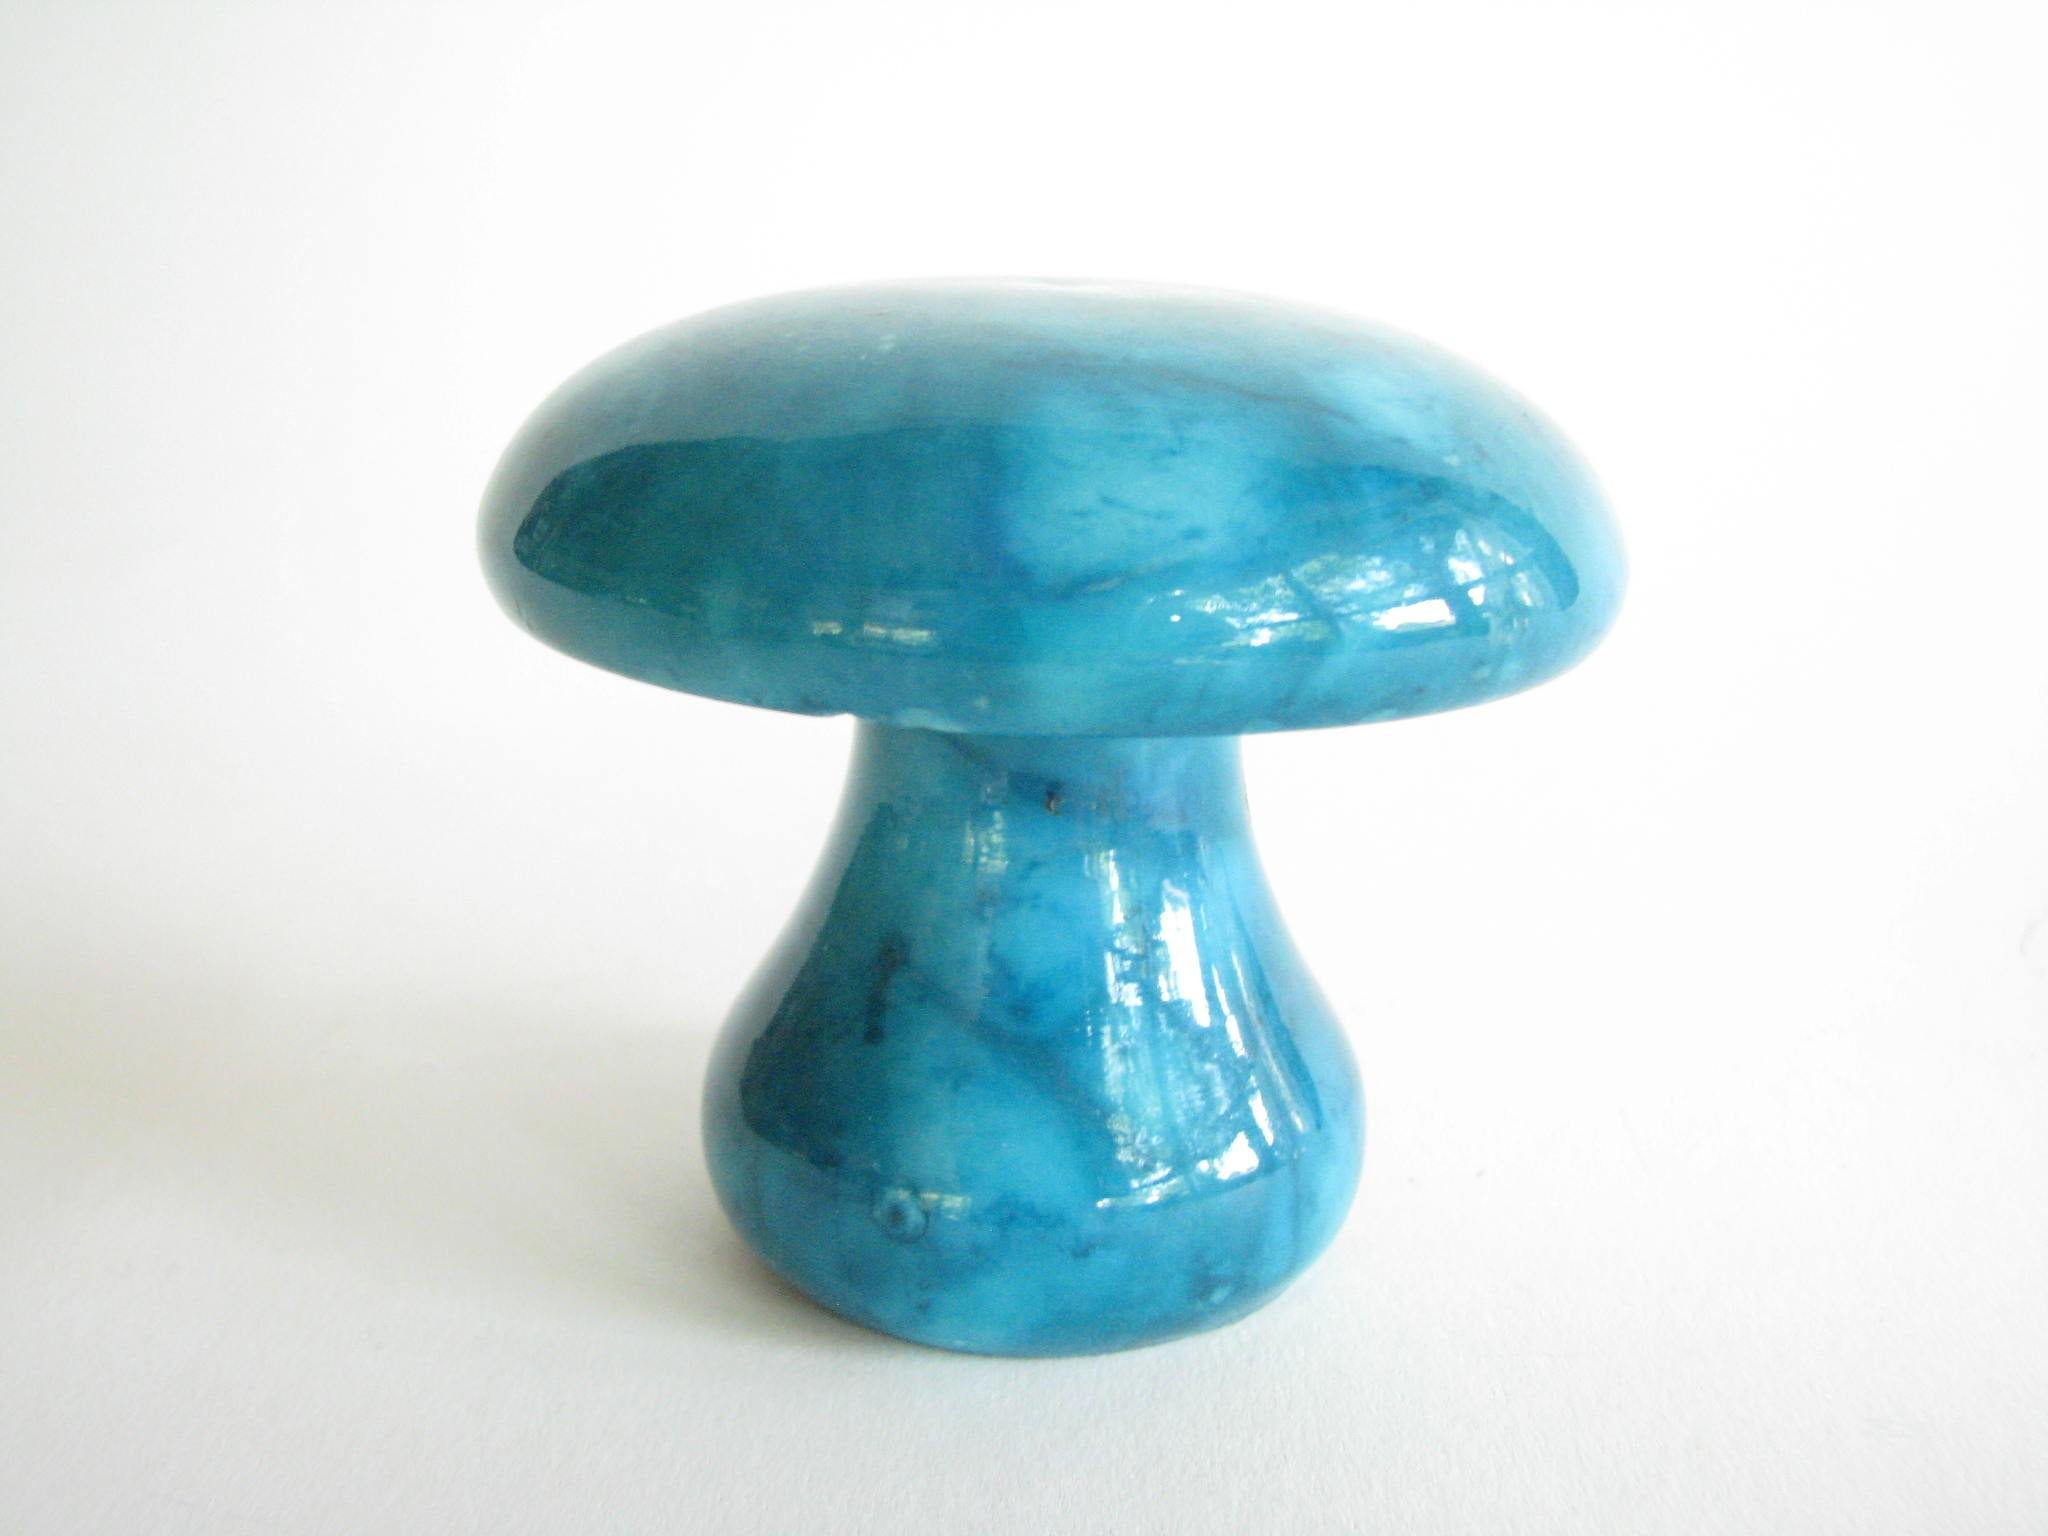 edgebrookhouse - Vintage Rosenthal Netter Turquoise Marble Mushroom Made in Italy